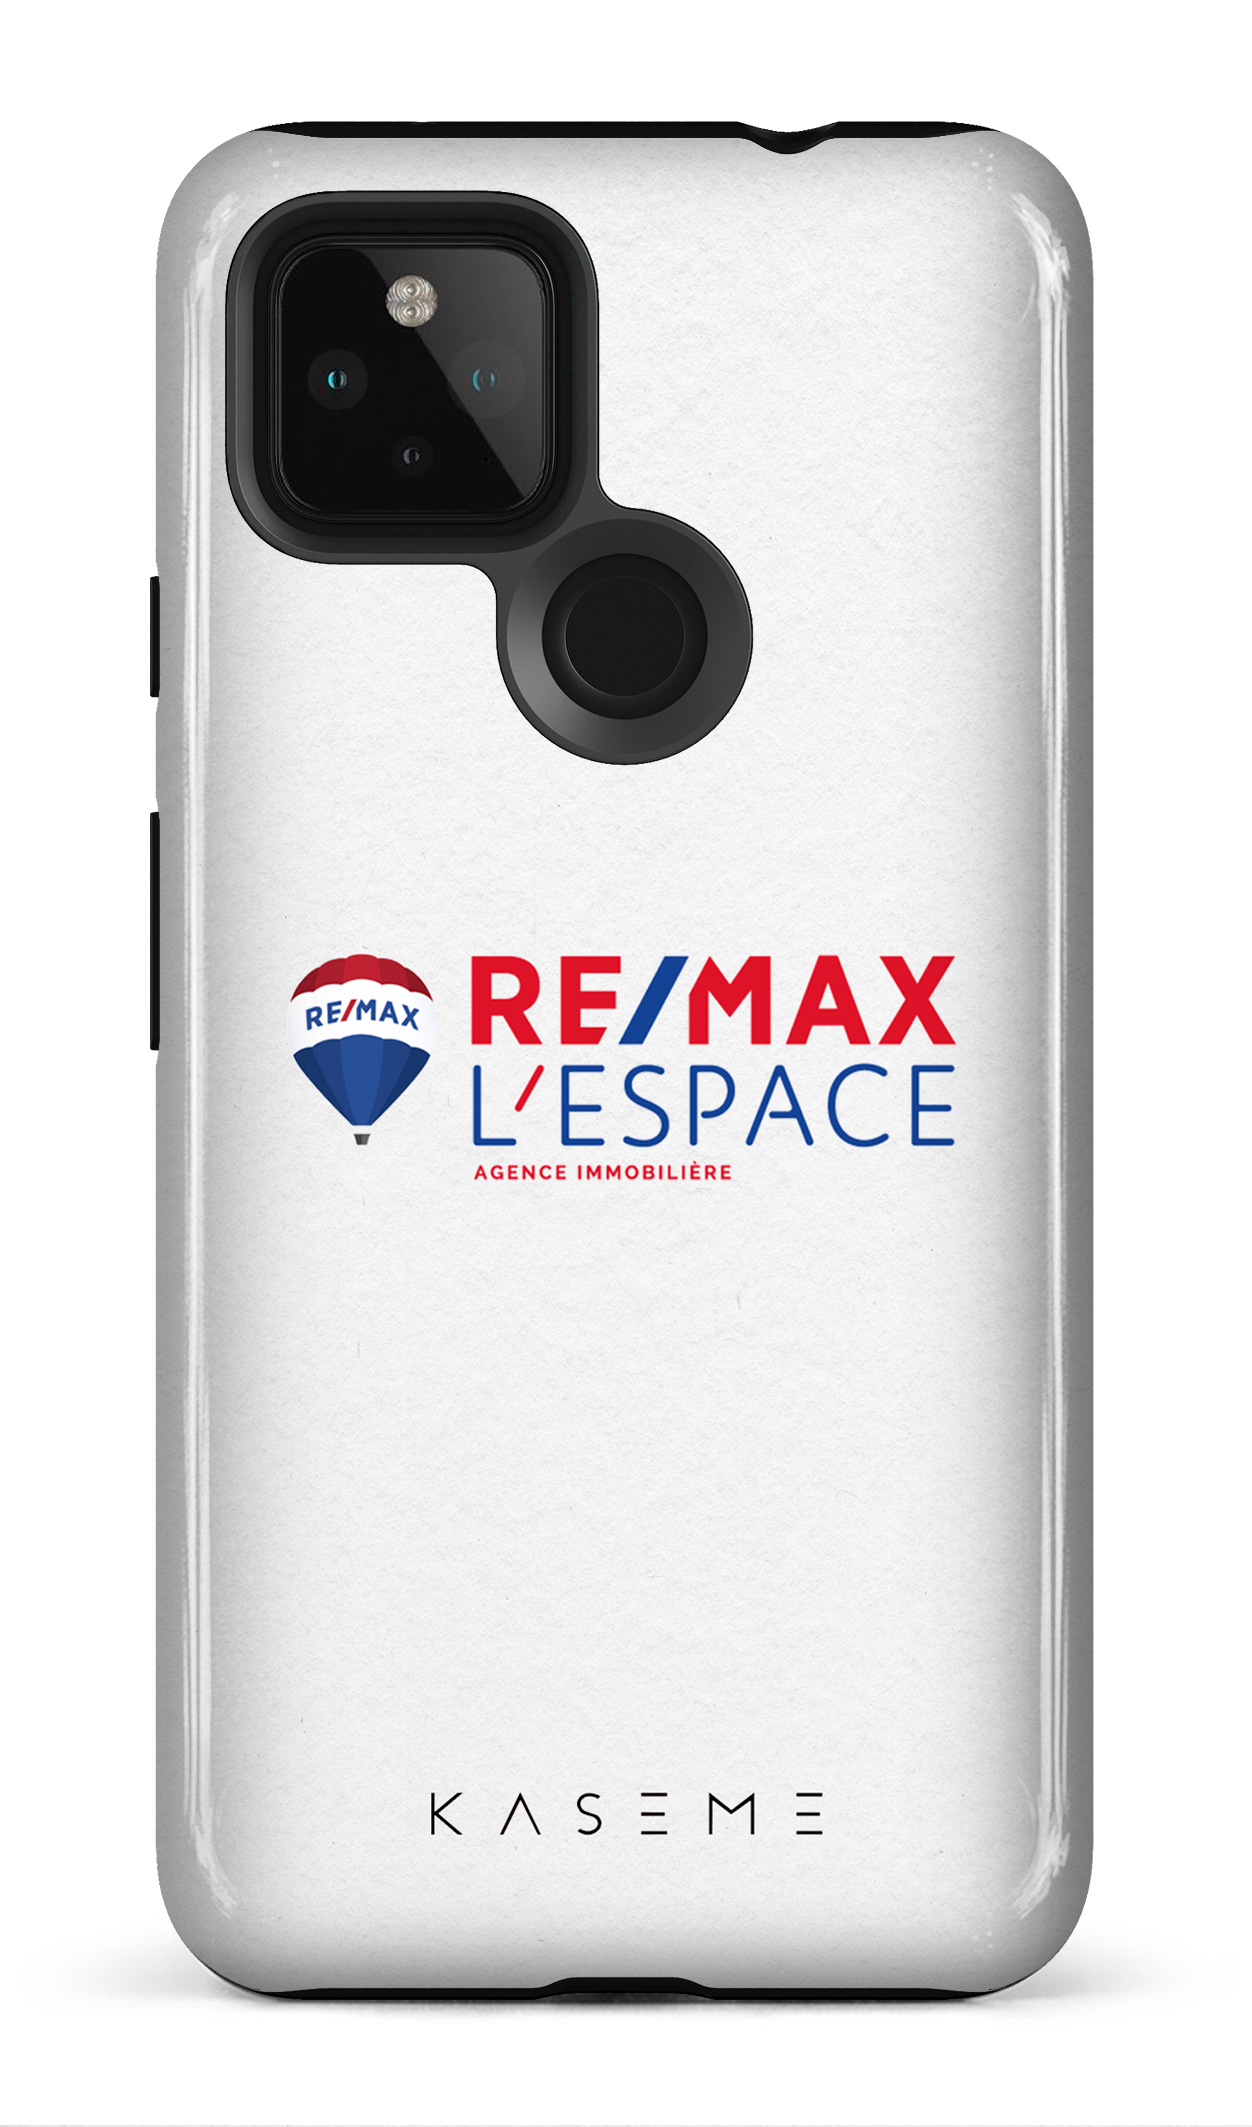 Remax L'Espace Blanc - Google Pixel 4A (5G)